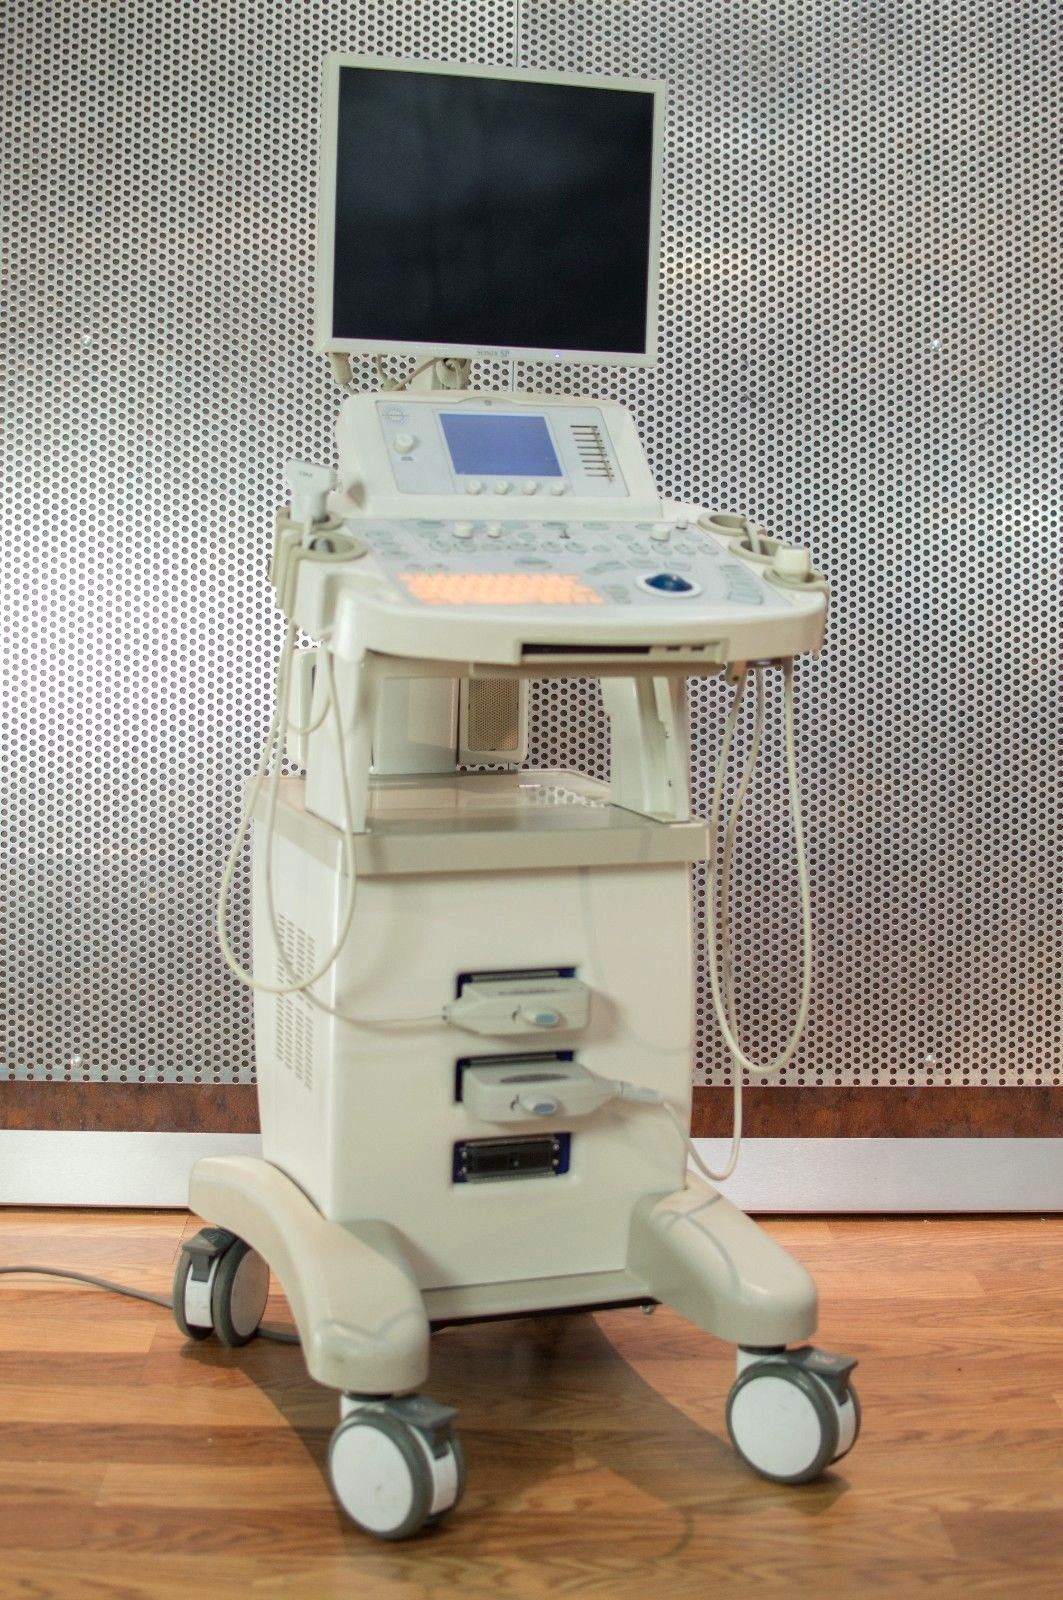 Ultrasonix Sonix SP Ultrasound System w/ Probes PA4-2 / 20 & L14-5 / 38 DIAGNOSTIC ULTRASOUND MACHINES FOR SALE